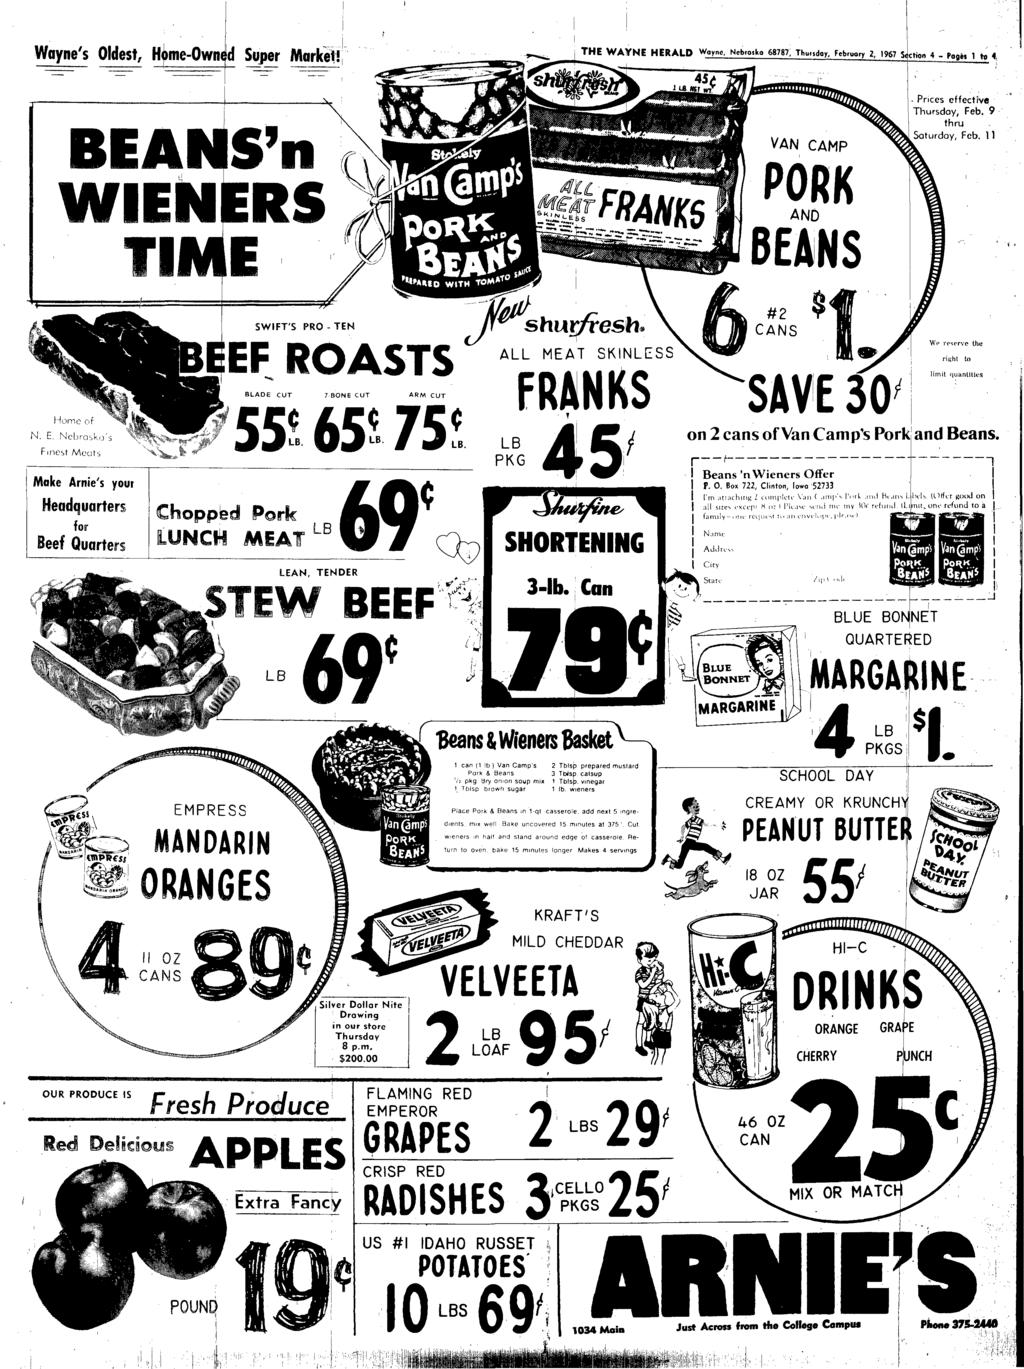 THE WAVNE HERALD Wayne. Nebraska 68787; Thursday, February Z, 1967 ""---., Home of N. E. Ncbro,kc)s Finest Mcuts Make Arnies your Headquarters for Beef Quarters EMPRESS POUNQ,,!t! 1 YhurtreSh.